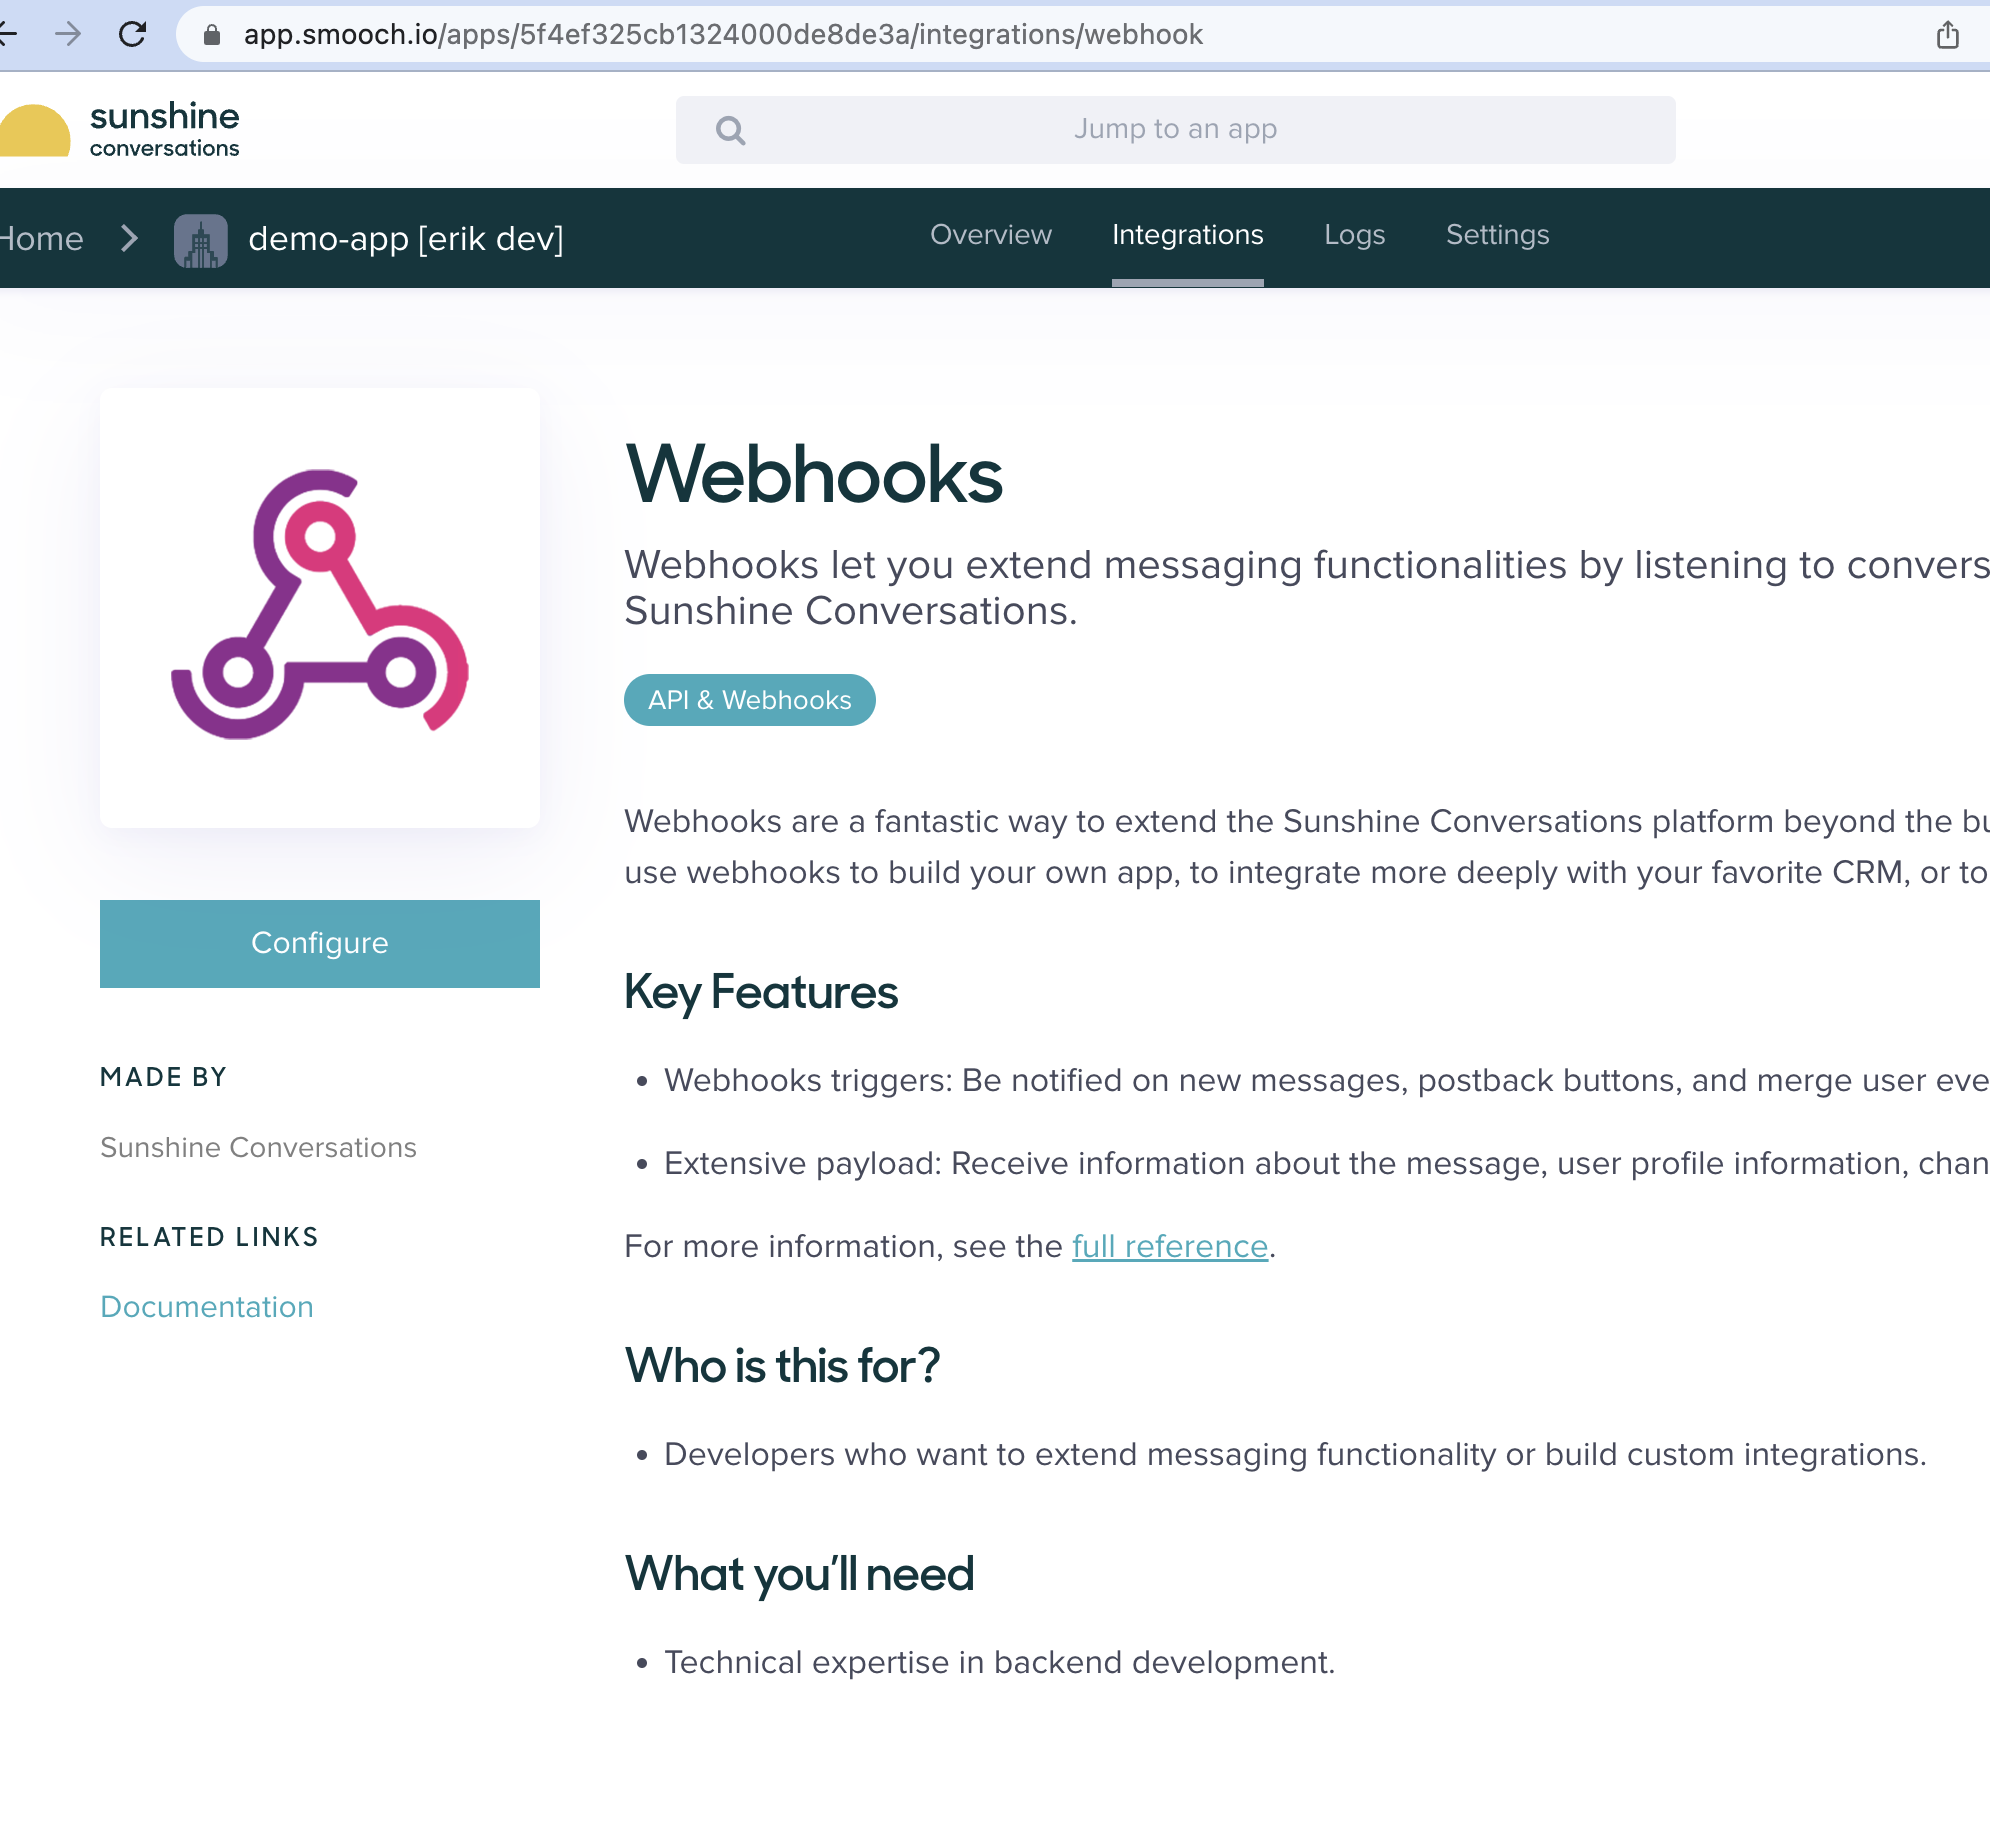 Add the "Webhooks" integration